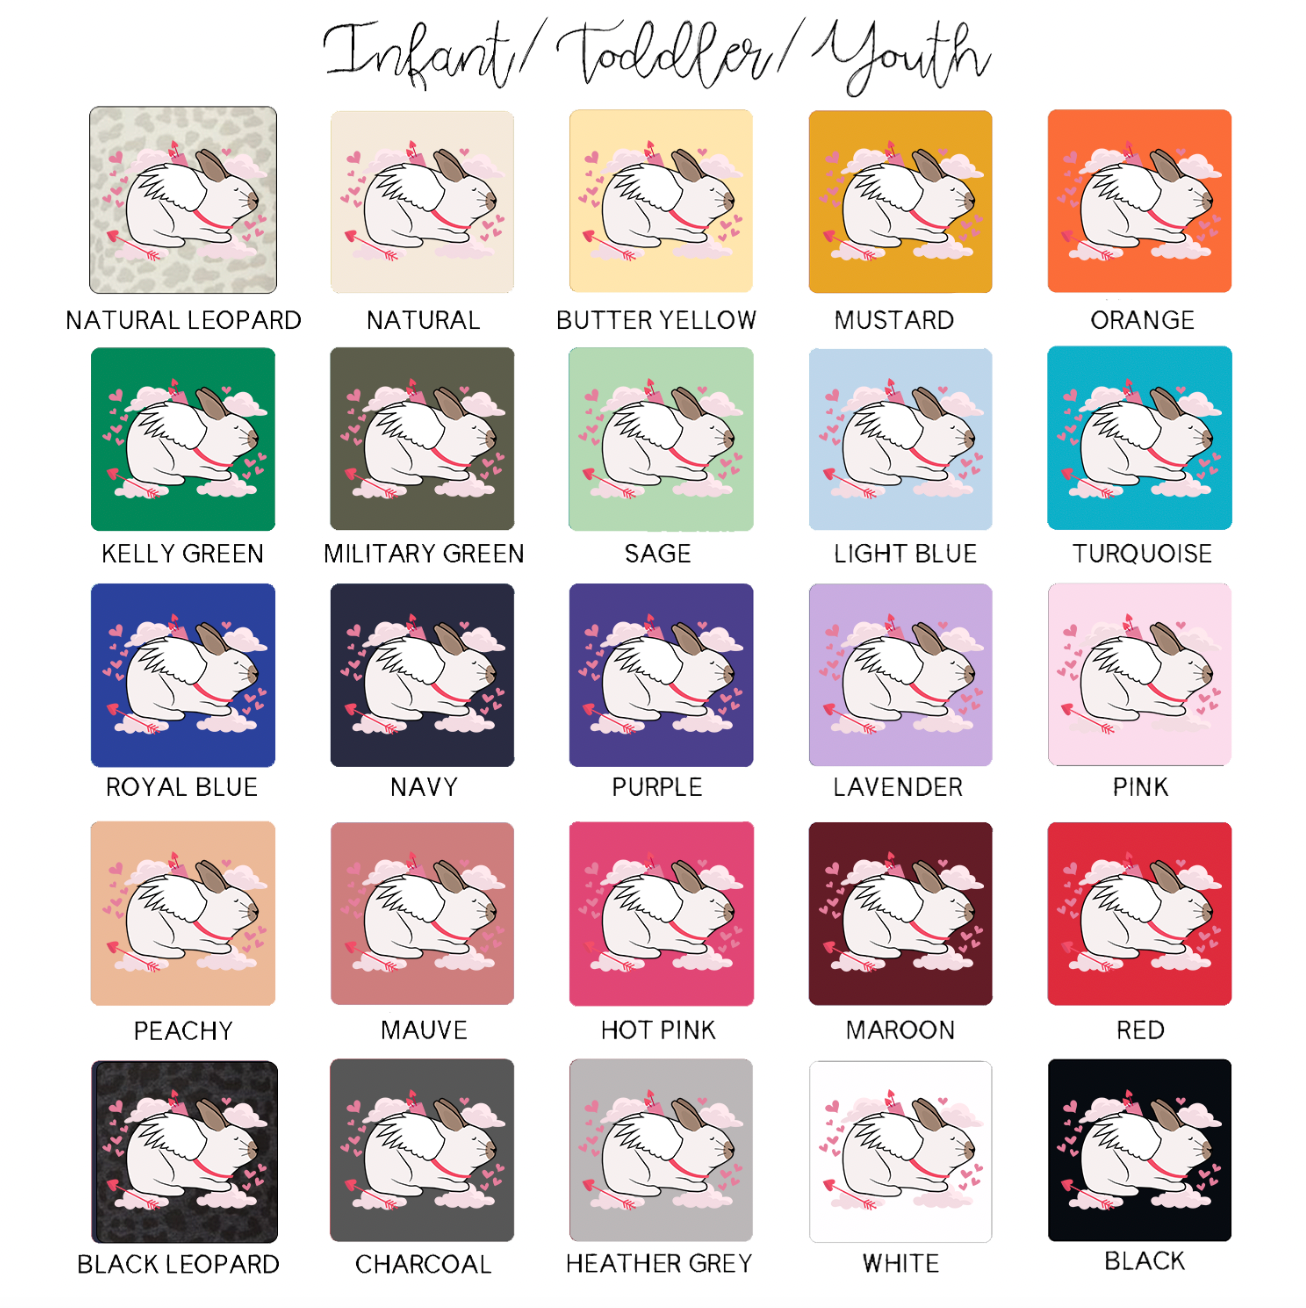 Cupid Rabbit One Piece/T-Shirt (Newborn - Youth XL) - Multiple Colors!